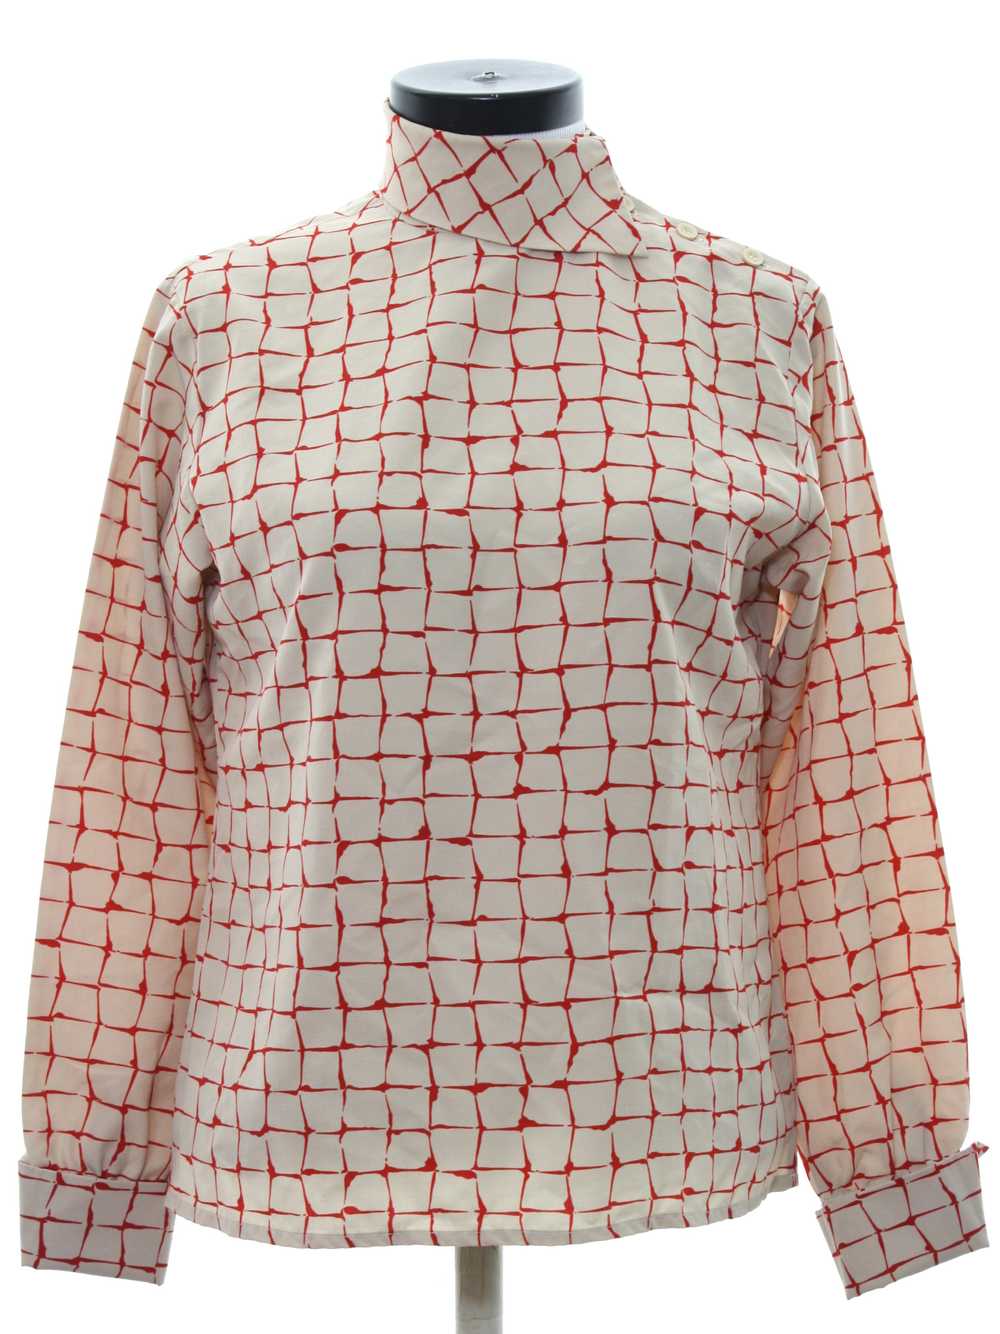 1960's Womens Asian Inspired Mod Print Shirt - image 1